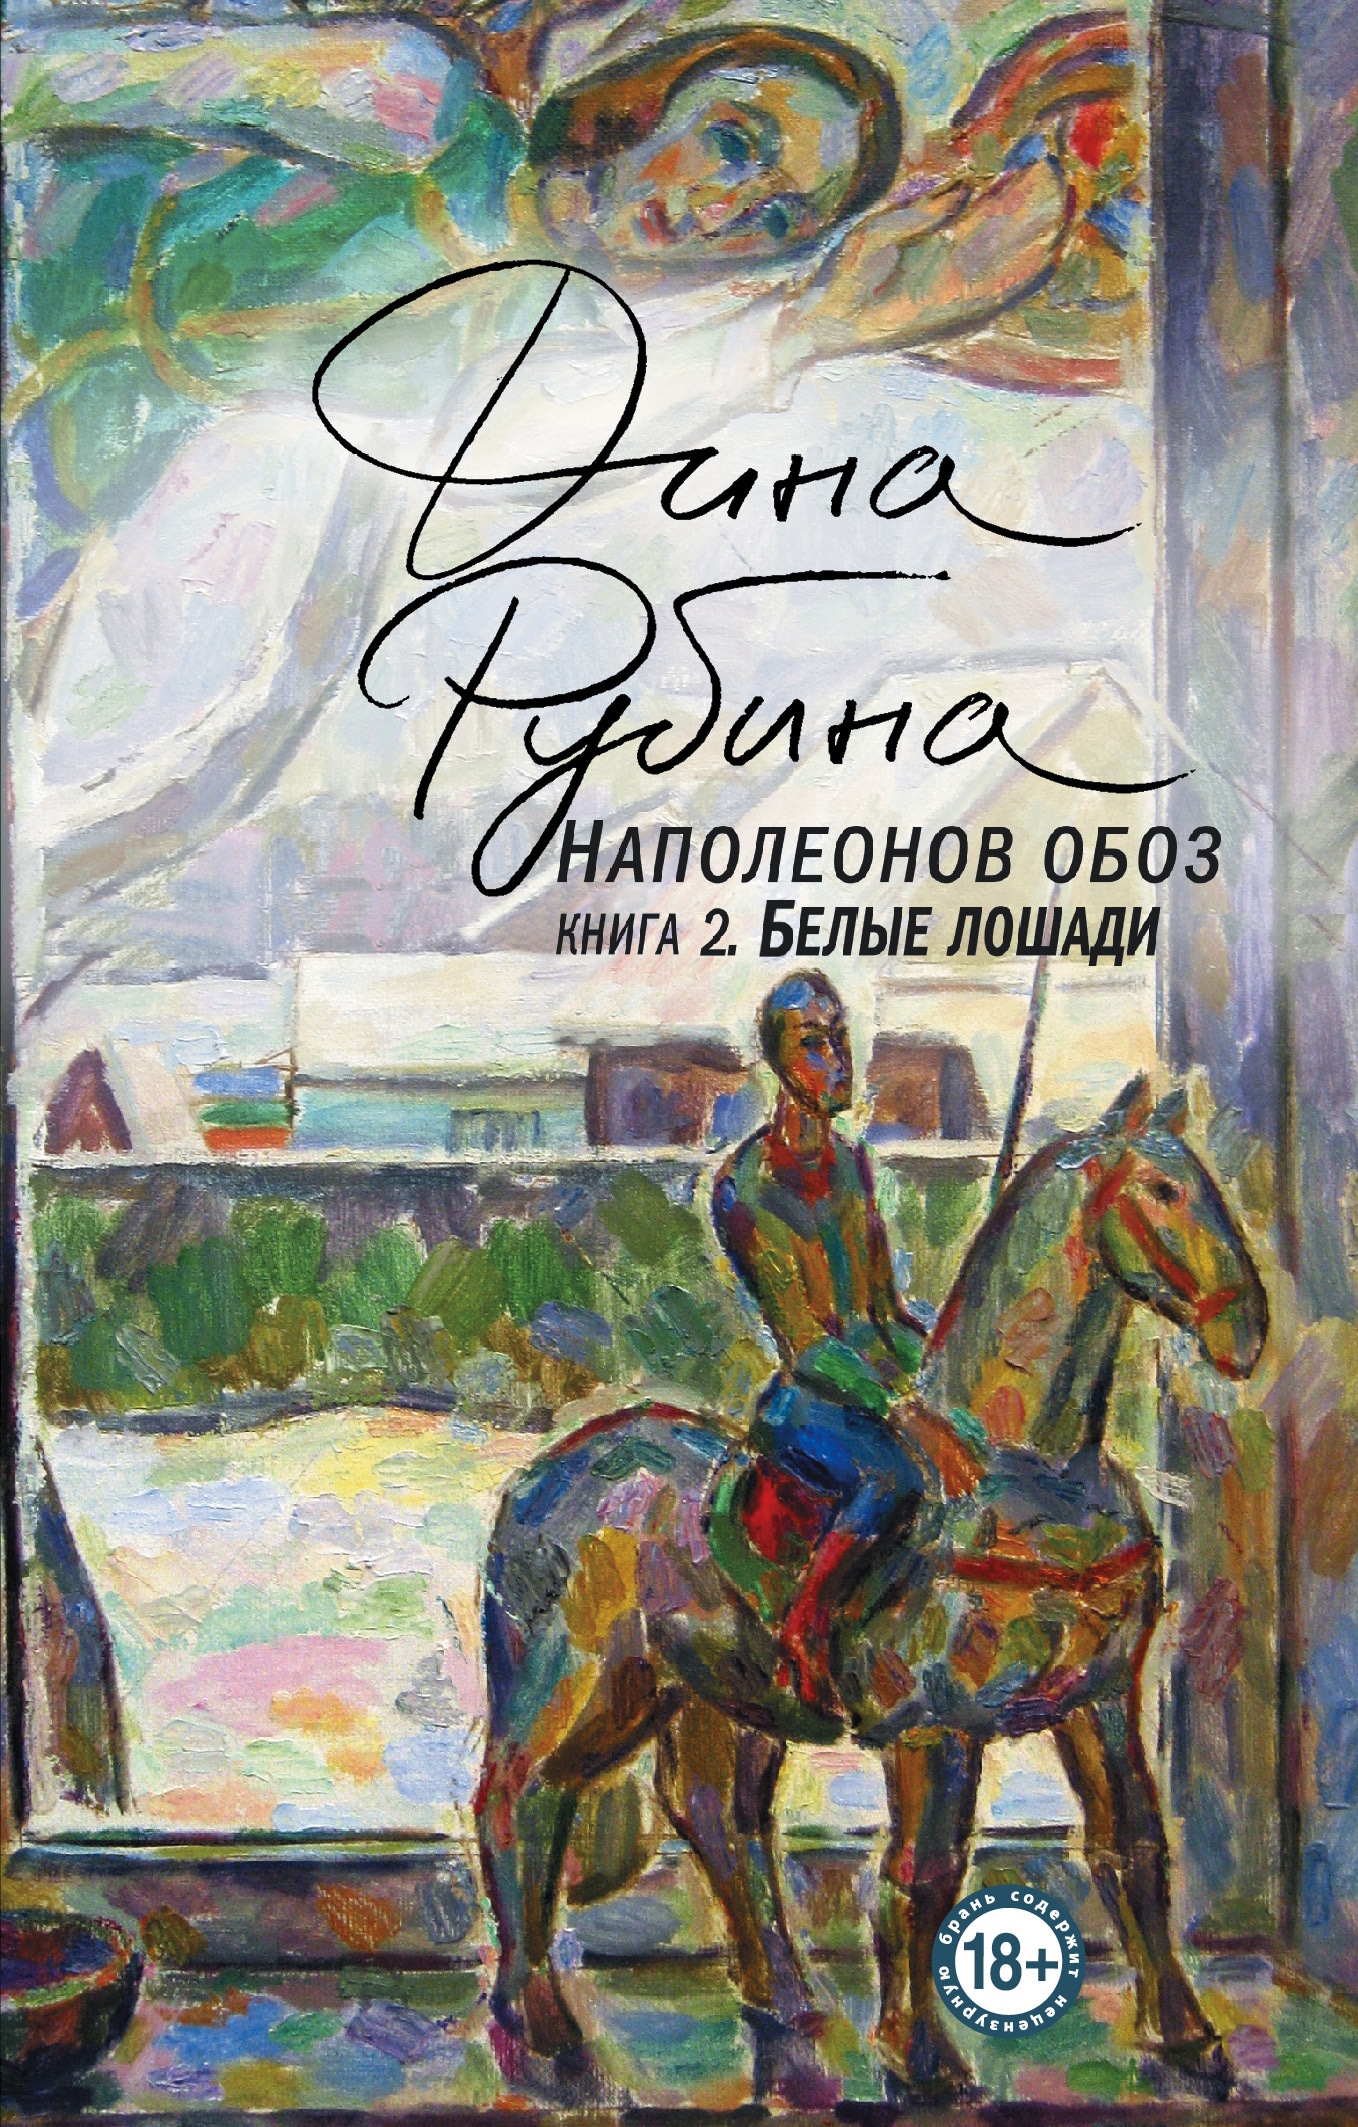 Book “Наполеонов обоз. Книга 2: Белые лошади” by Дина Рубина — 2021